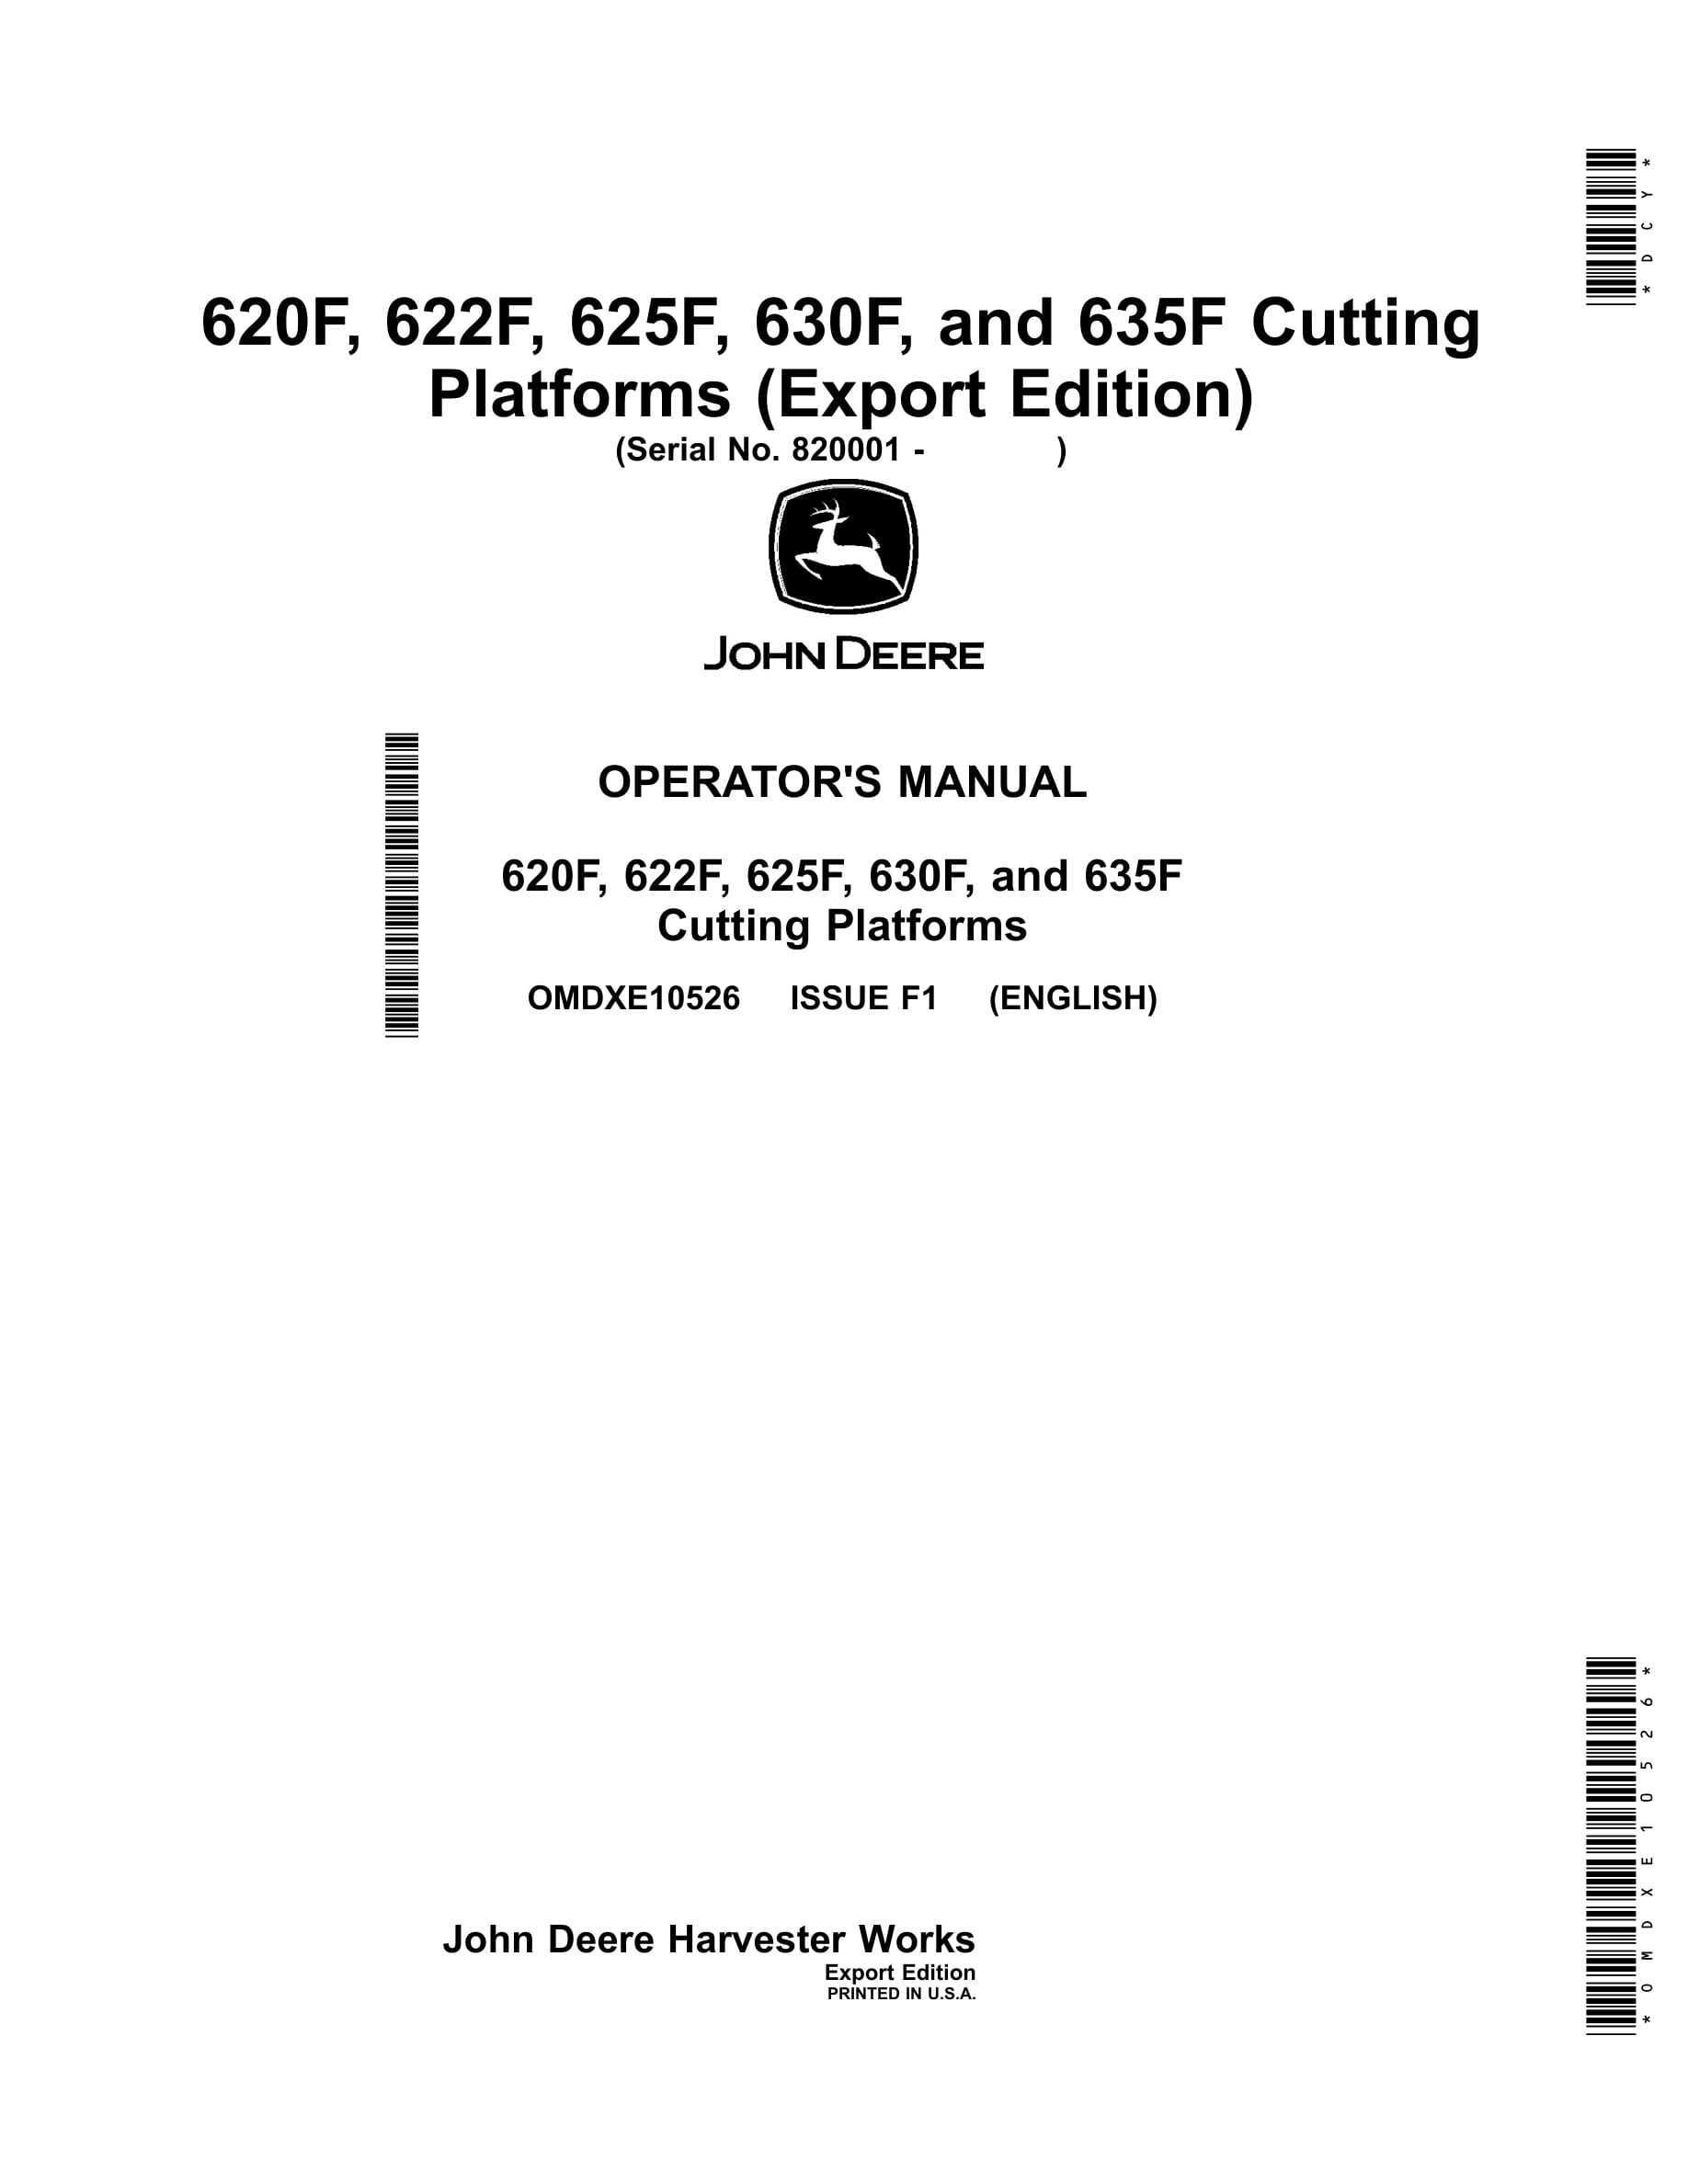 John Deere 620F, 622F, 625F, 630F, and 635F Cutting Platforms Operator Manual OMDXE10526-1